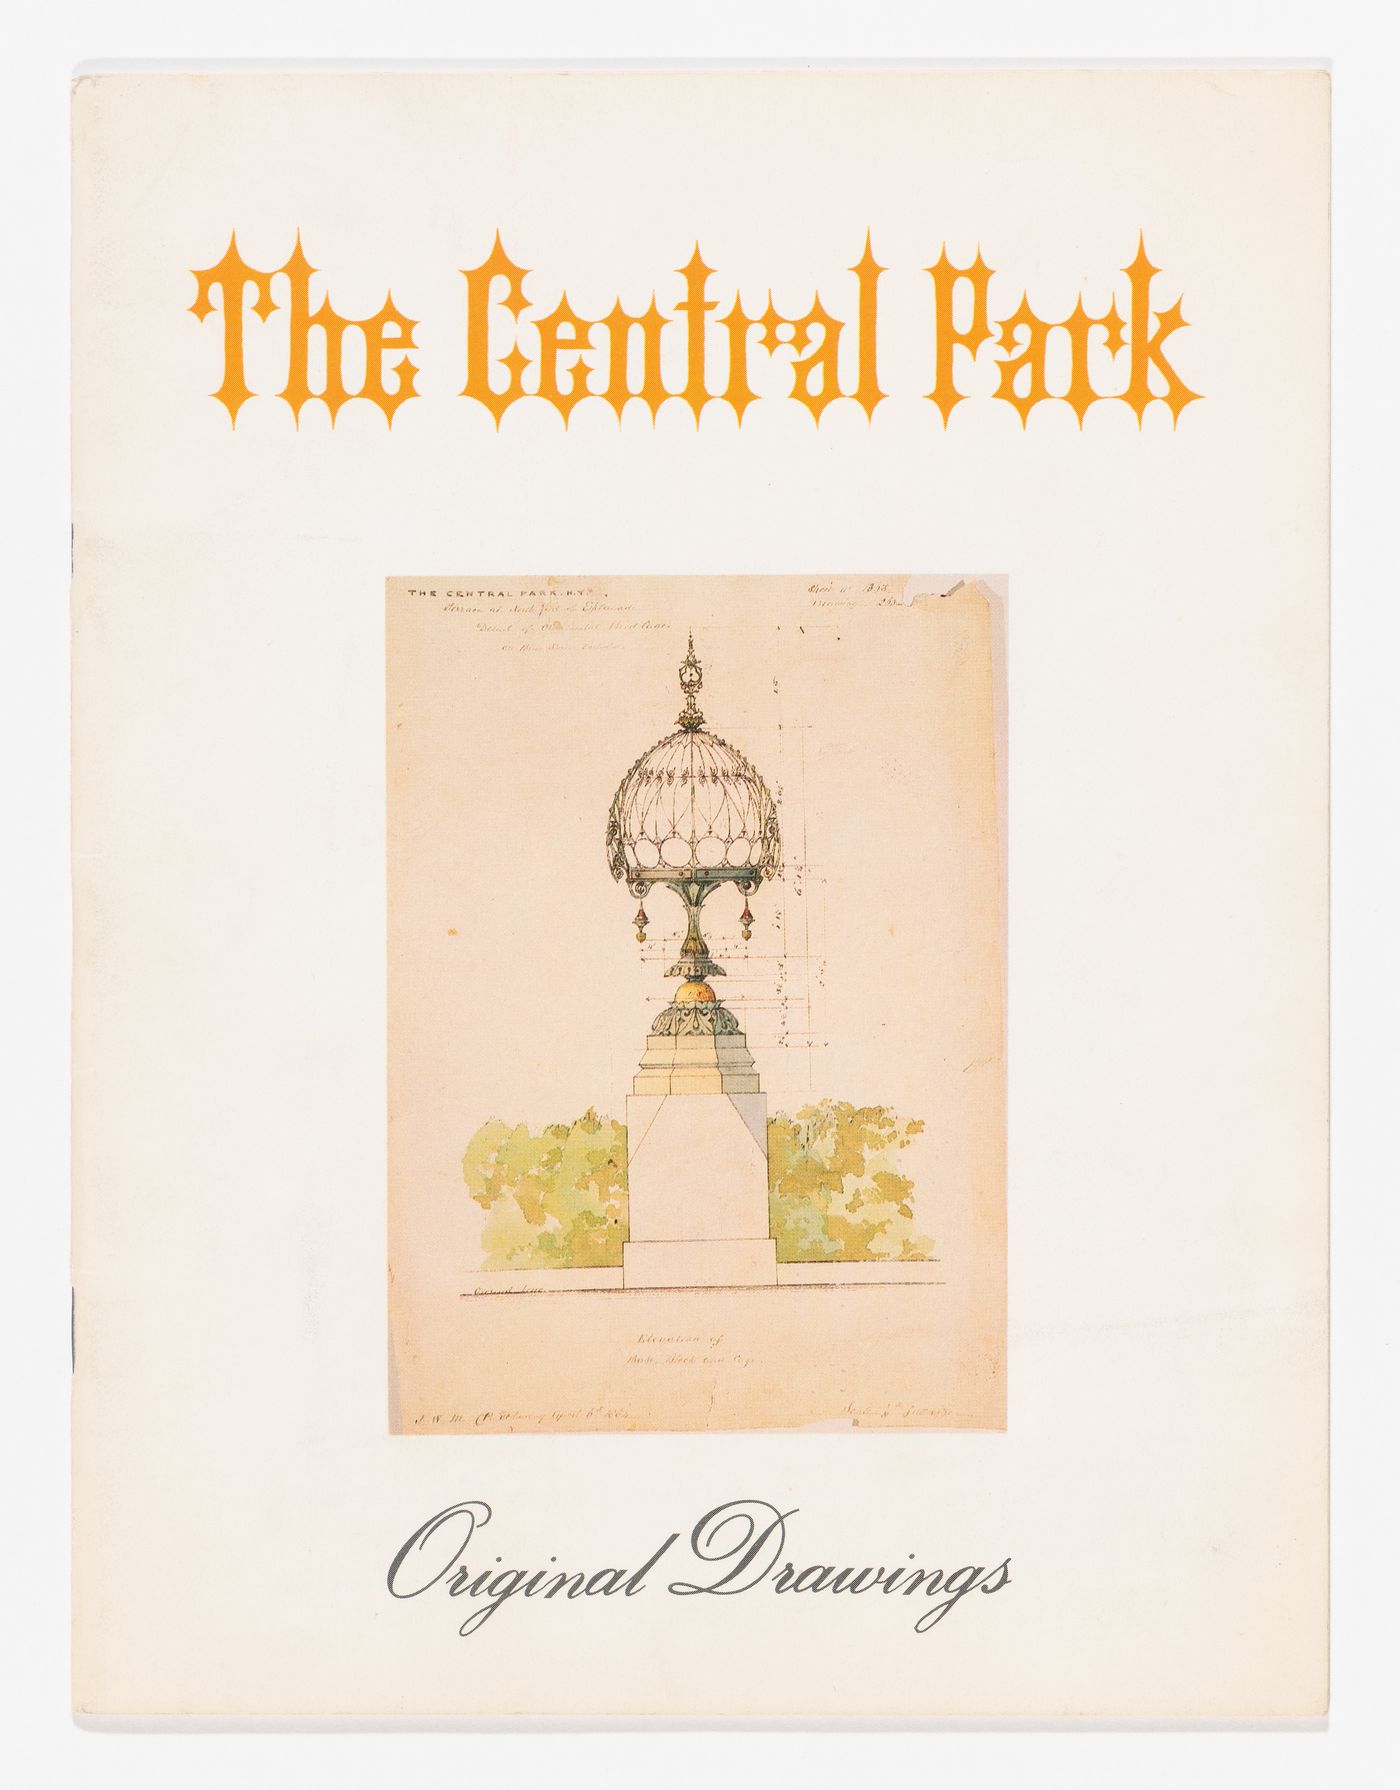 Leaflet "The Central Park: Original drawings" for the exhibition Olmsted: L'origine del parco urbano e del parco naturale contemporaneo